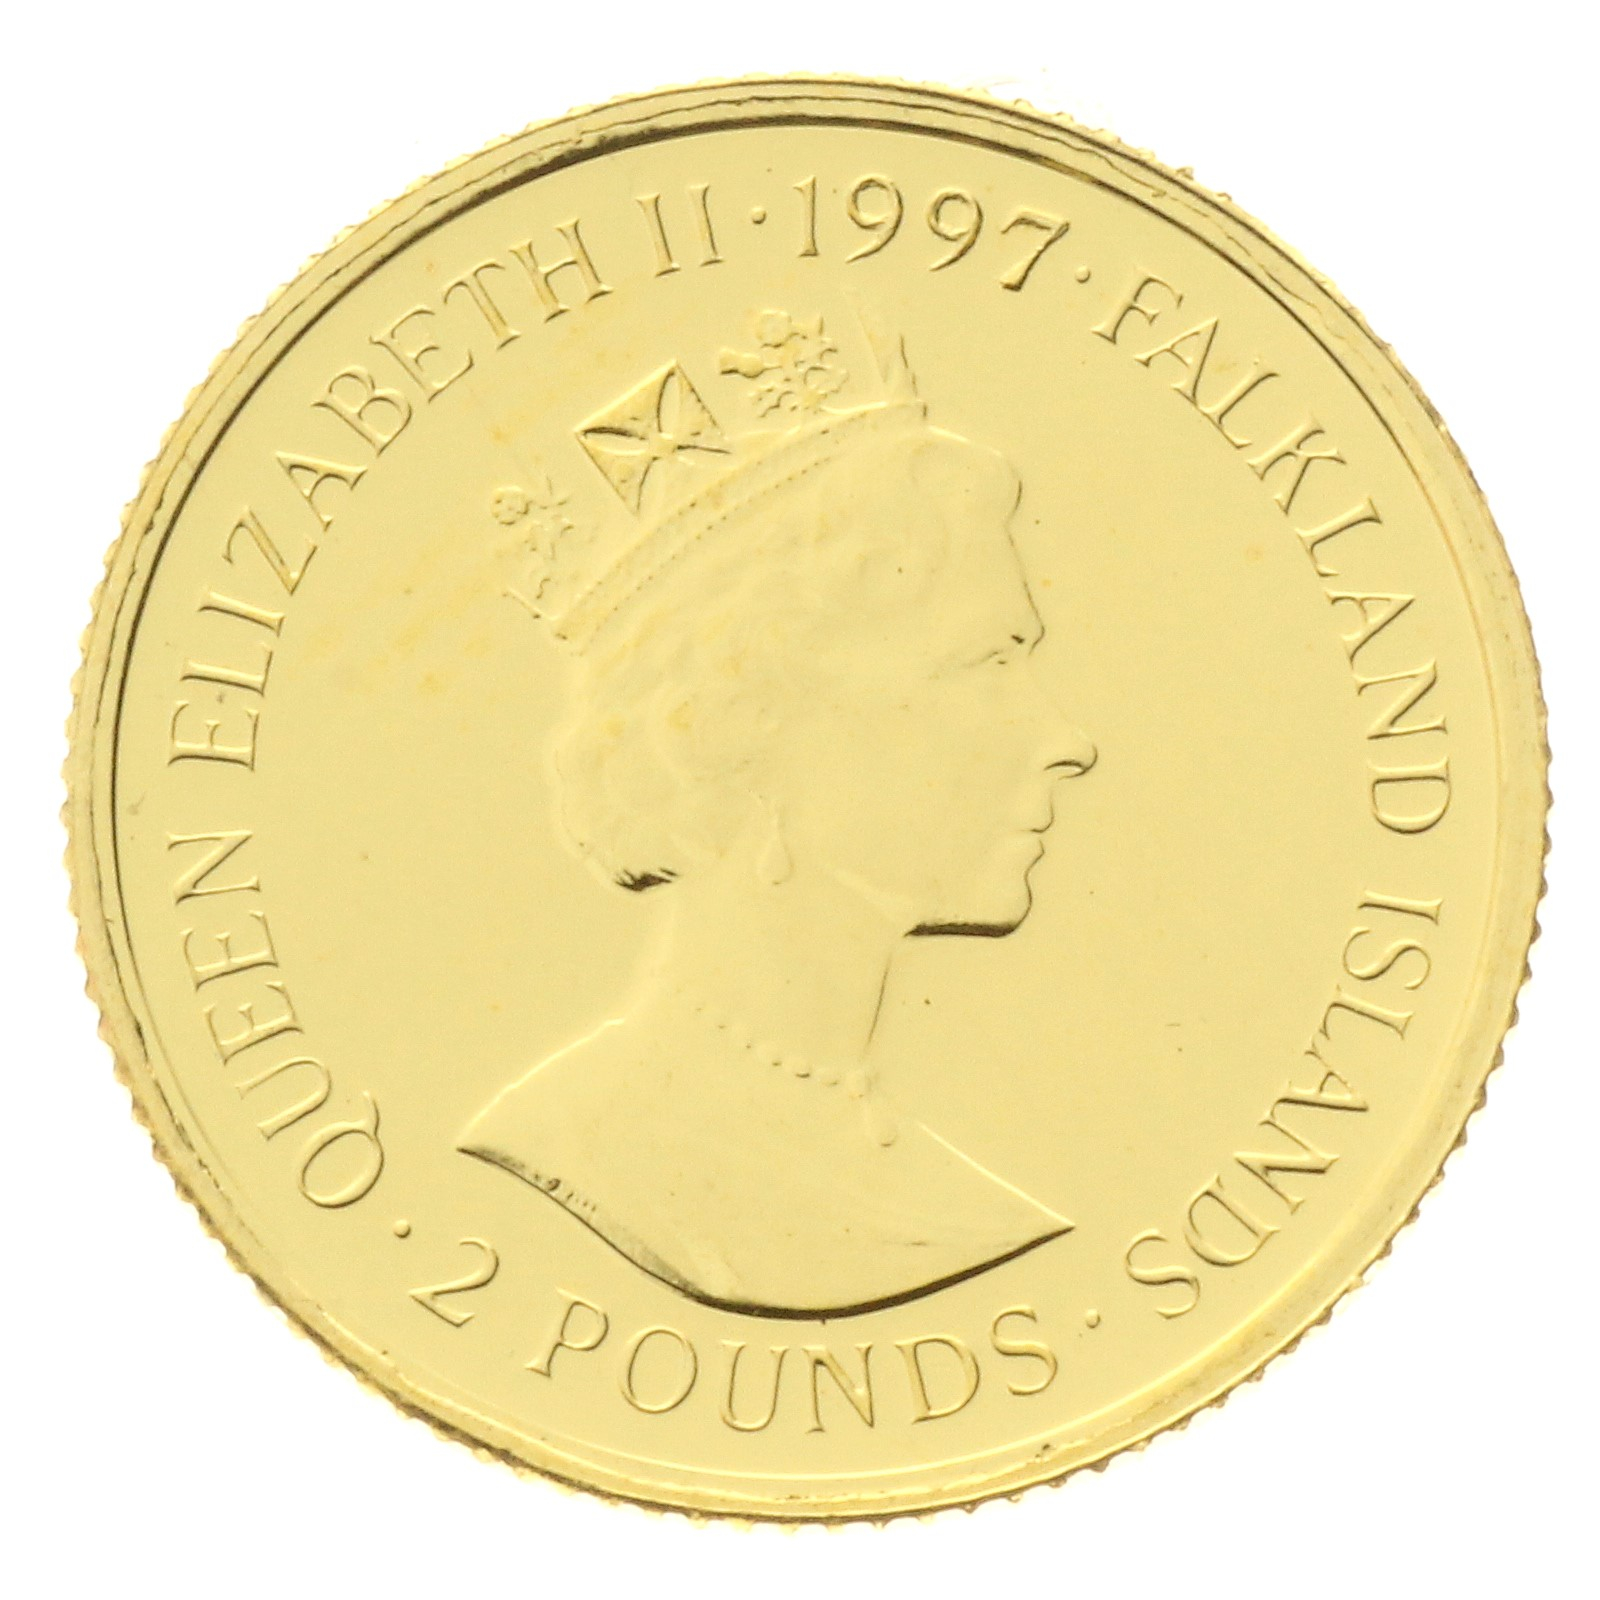 Falkland Islands - 2 Pounds - 1997 - Elizabeth II - King Henry VIII